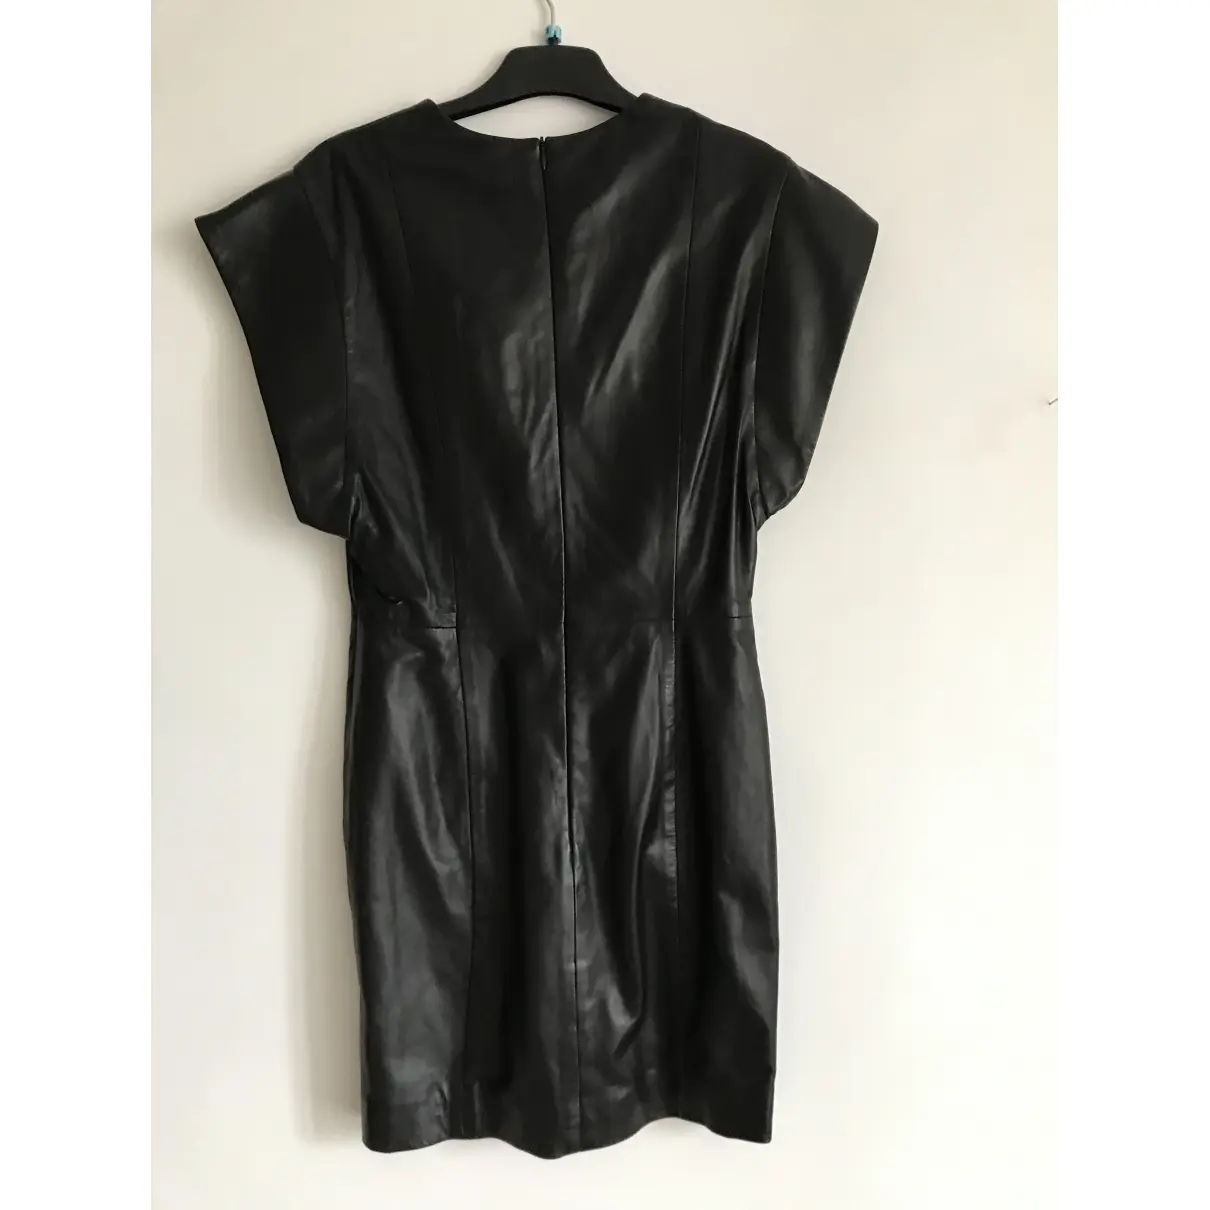 Buy Iro SS19 leather mini dress online